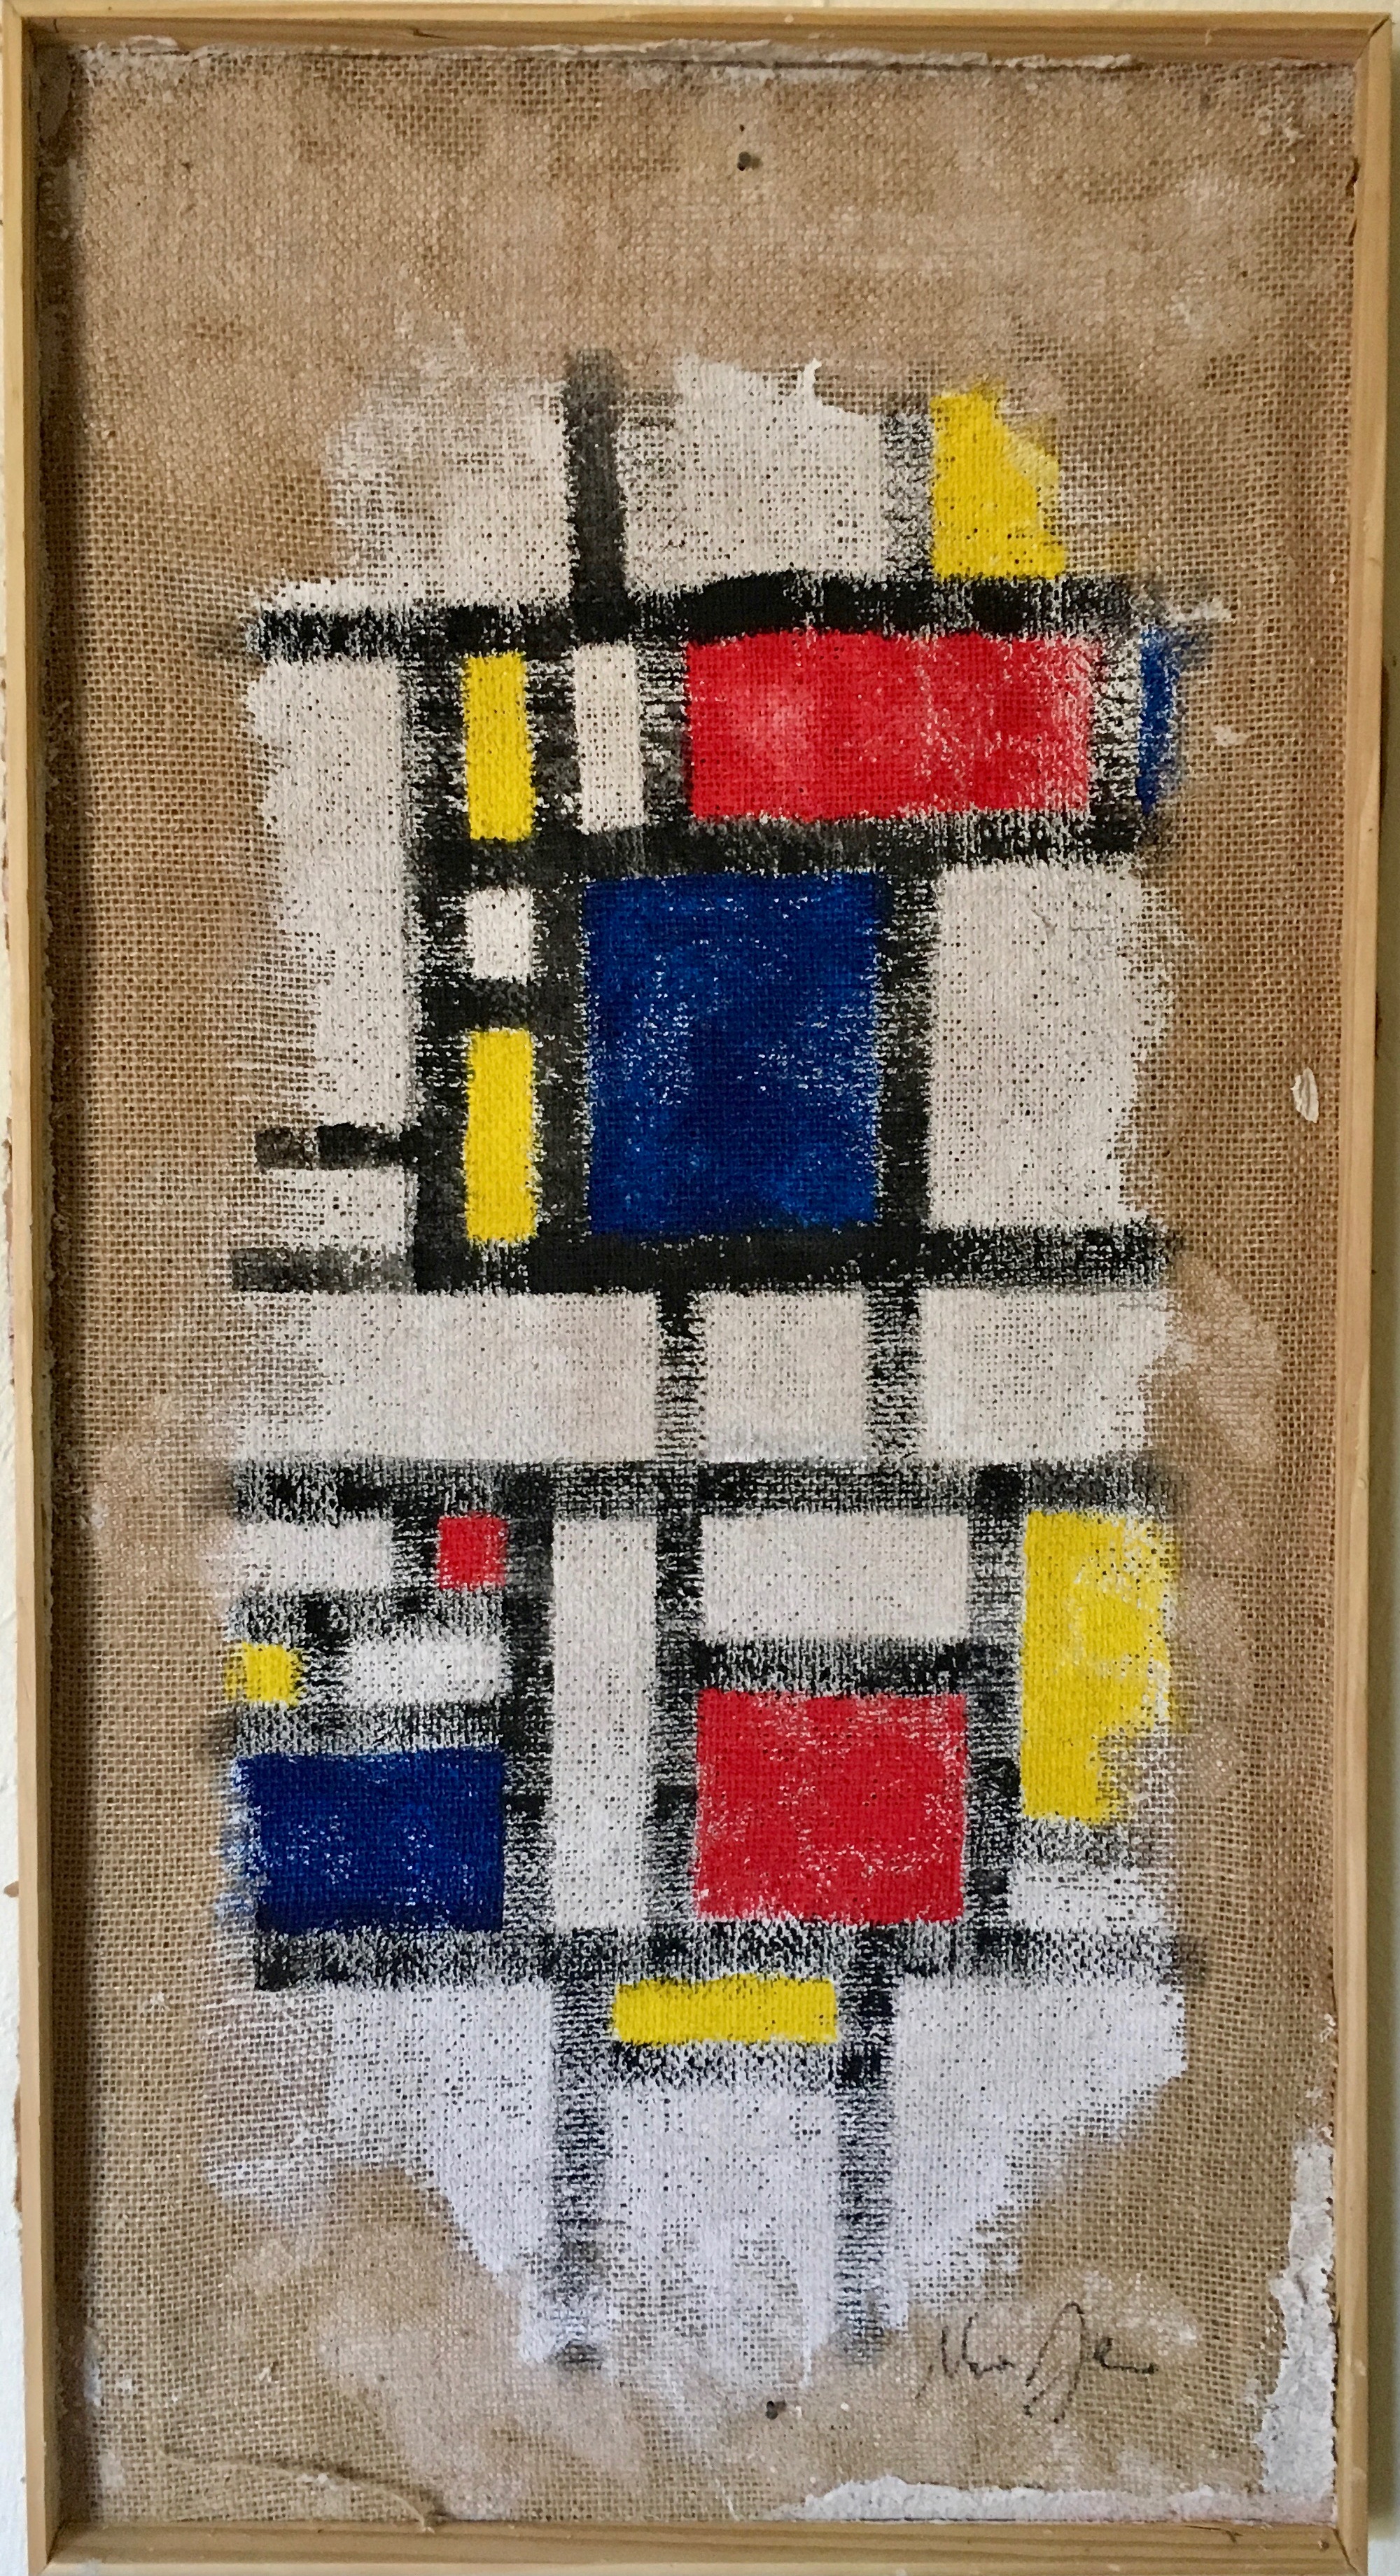 Mondrian in a Box (Acrylic on raw canvas, 2017)